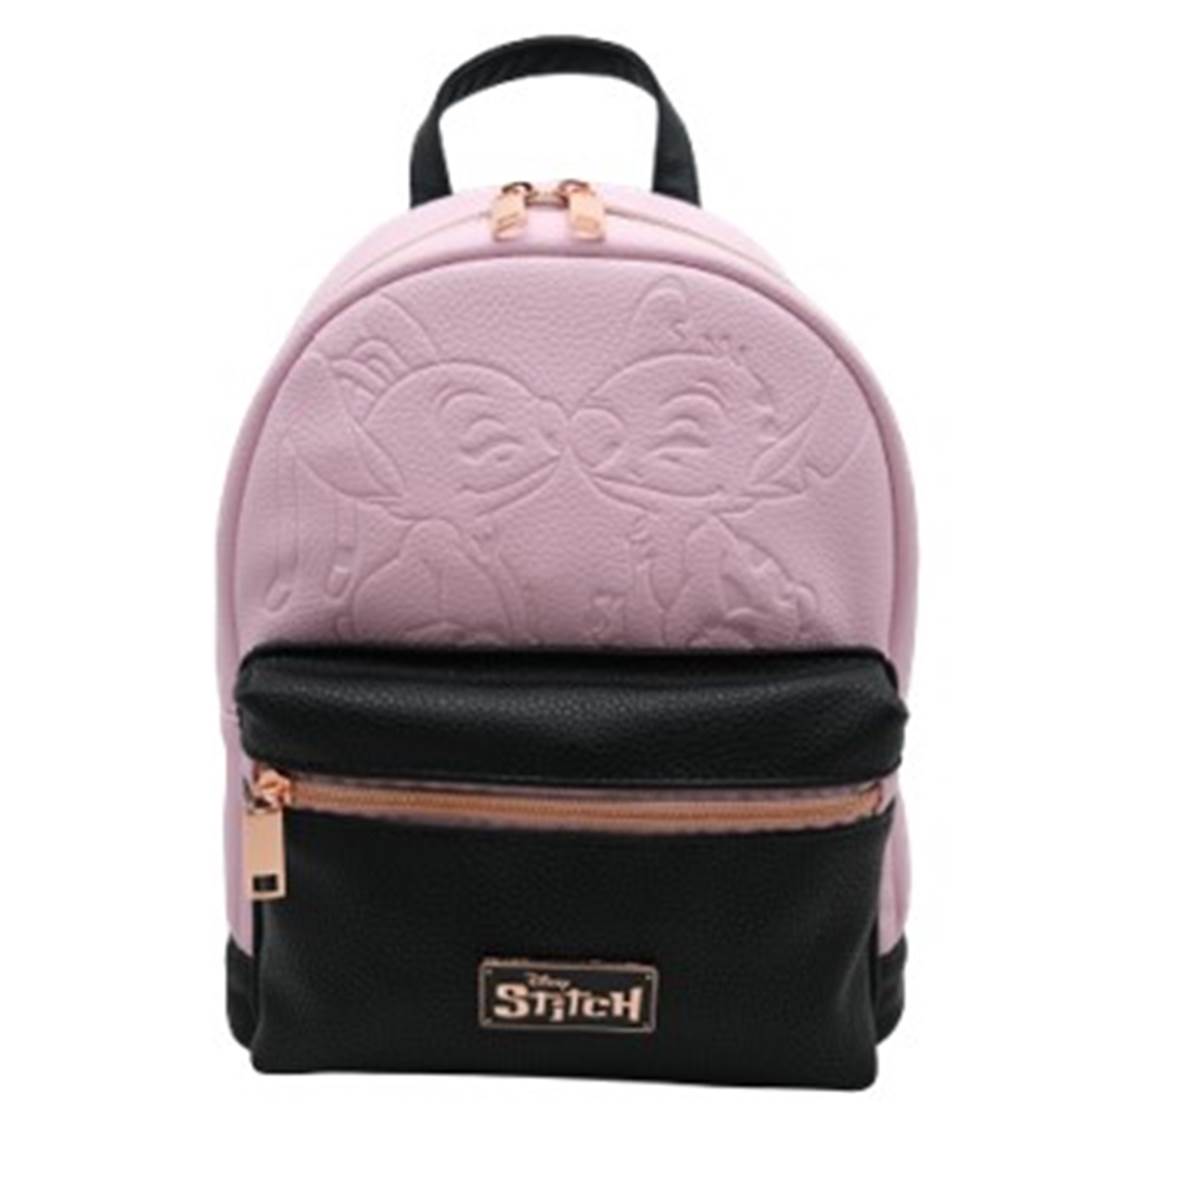 DISNEY - Mini sac à dos - Lilo et Stitch